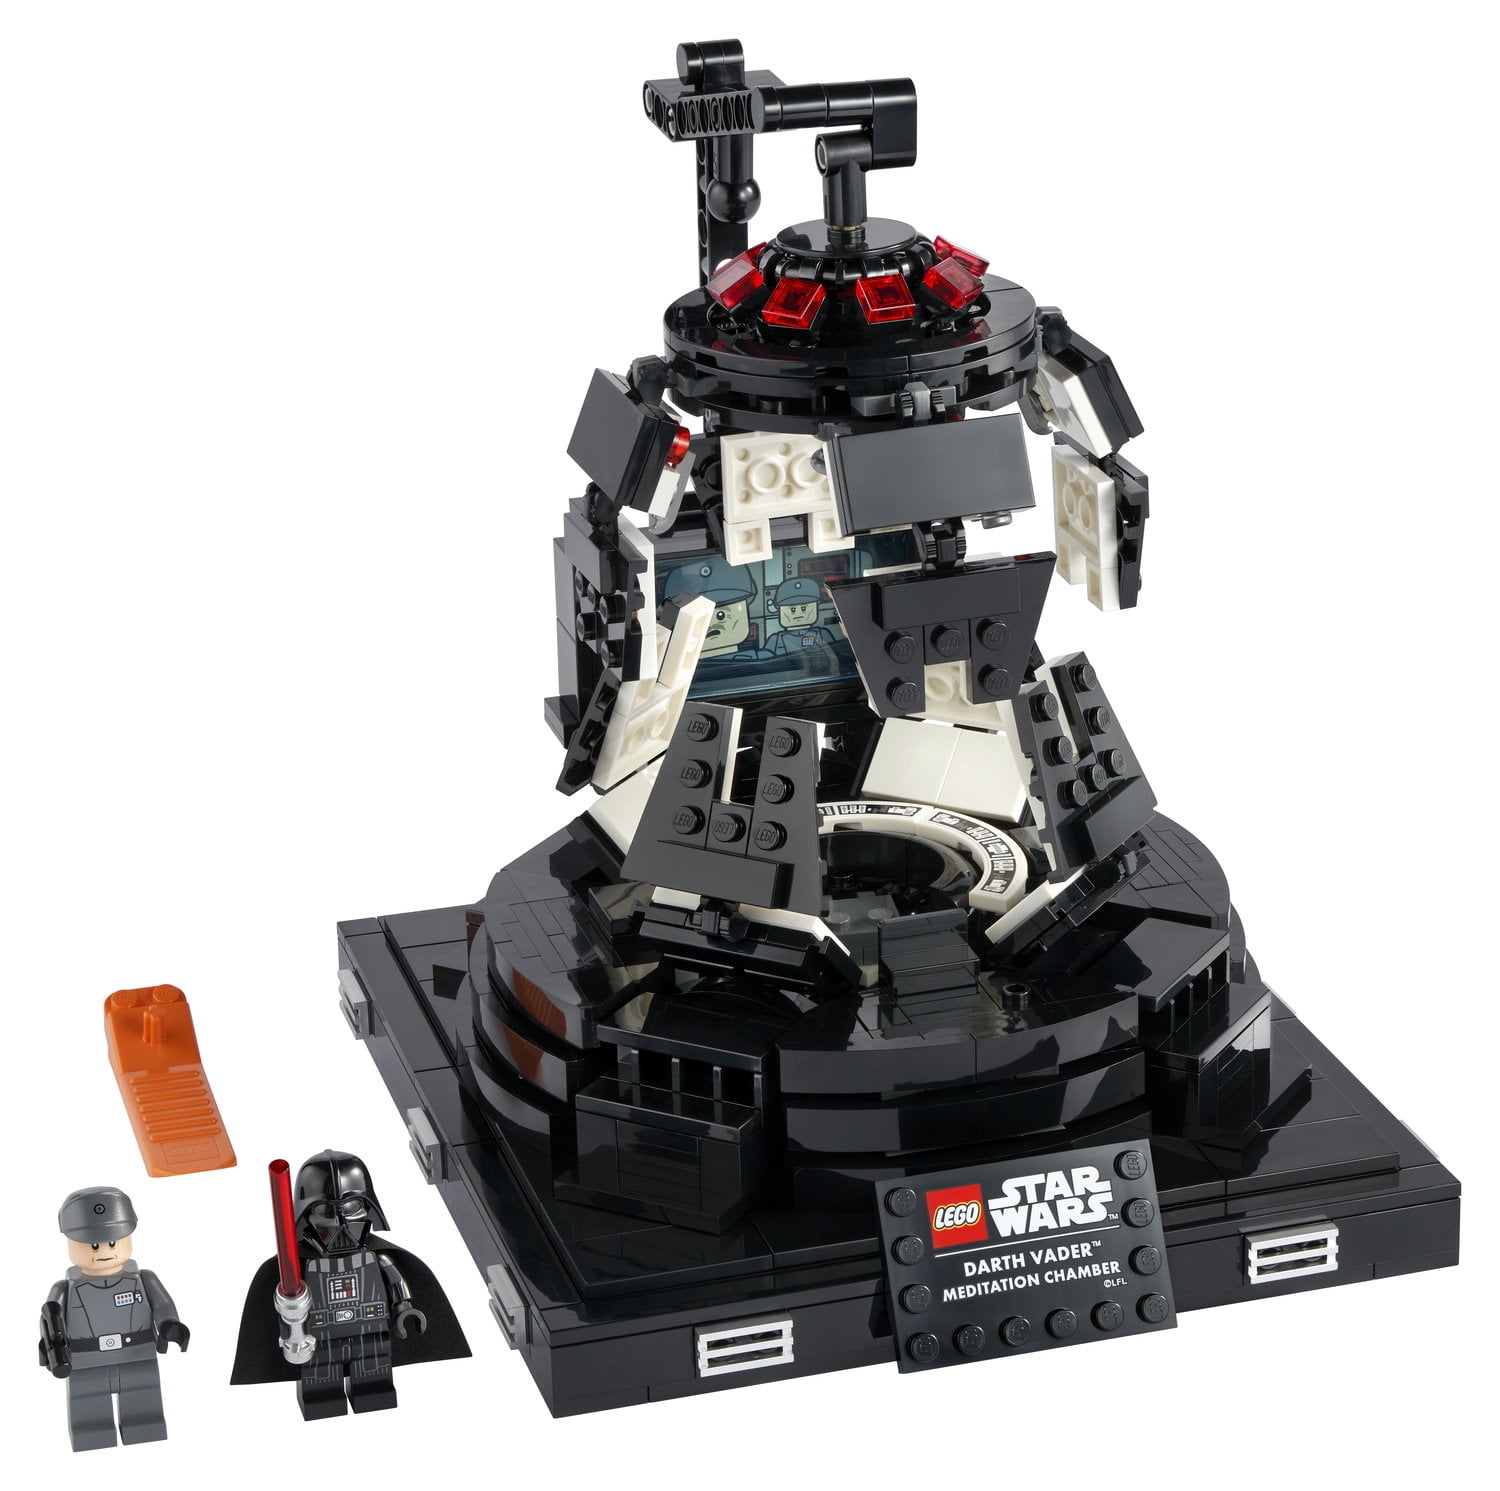 LEGO Star Wars Darth Vader Chamber 75296 Fun Creative Building (663 Pieces) - Walmart.com